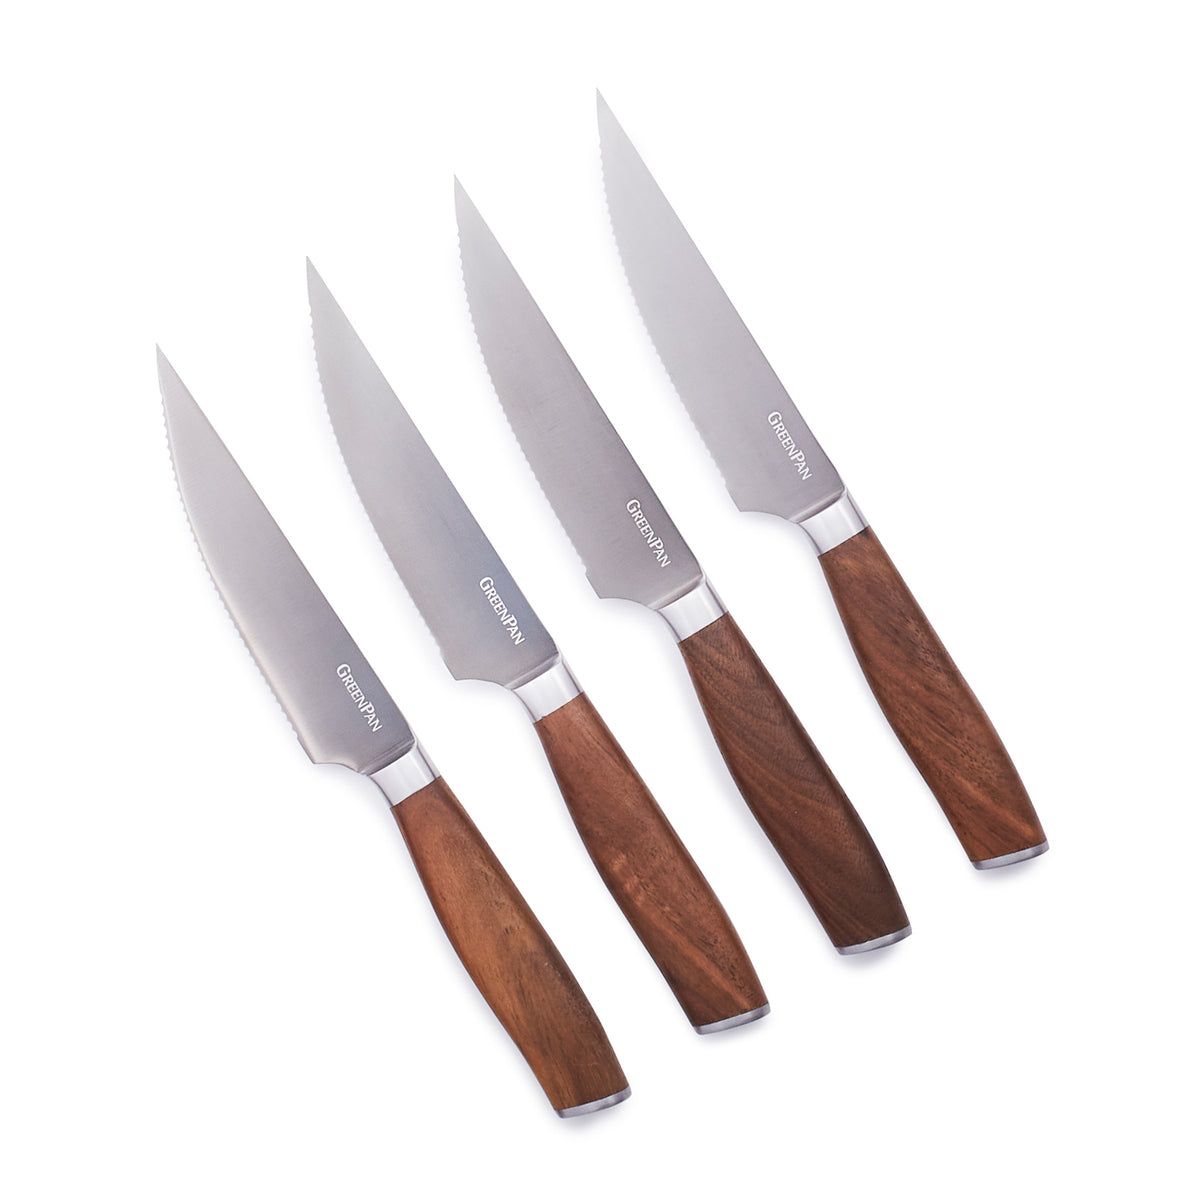 5 Piece Steak Knives set, 4 Steak Knives, And Wood Block